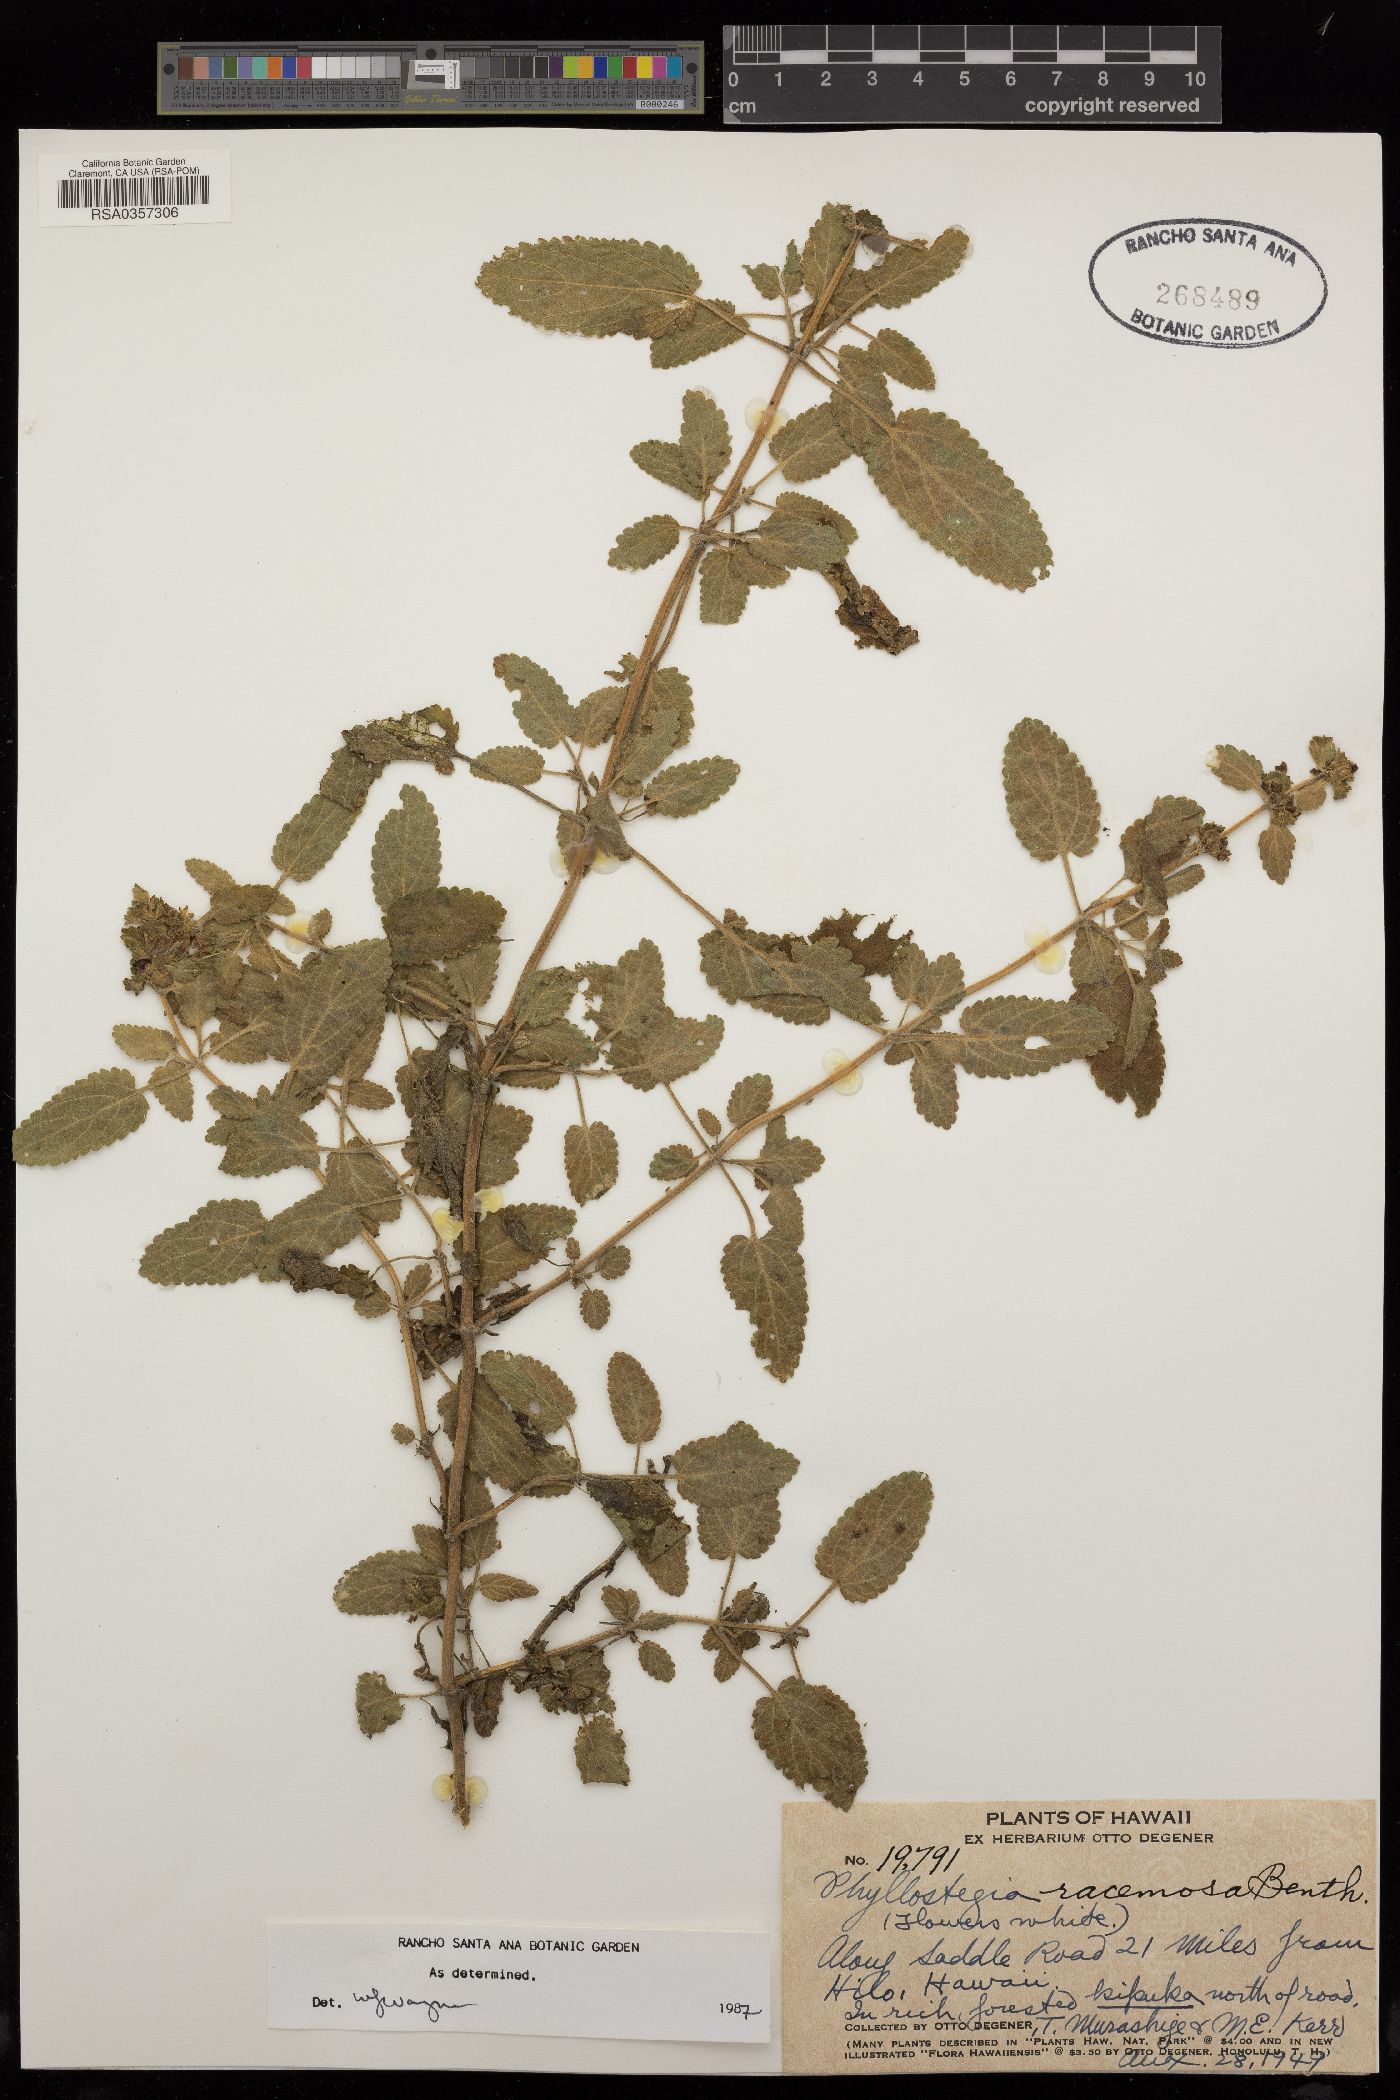 Phyllostegia racemosa image